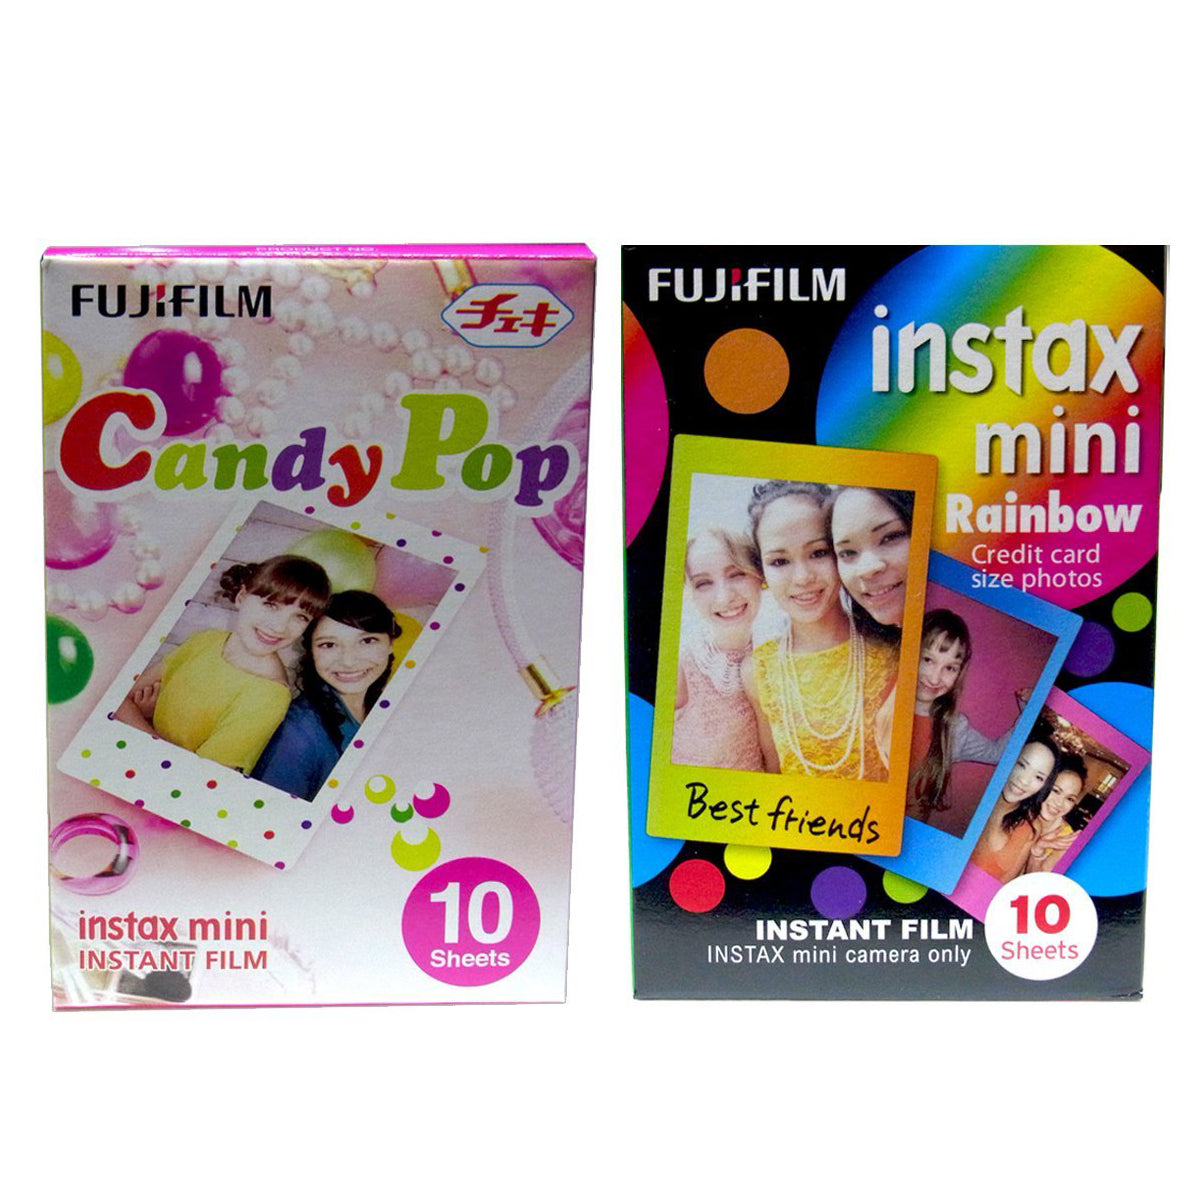 Fujifilm Instax Mini Rainbow Film - 1 Pack of 10 Photos